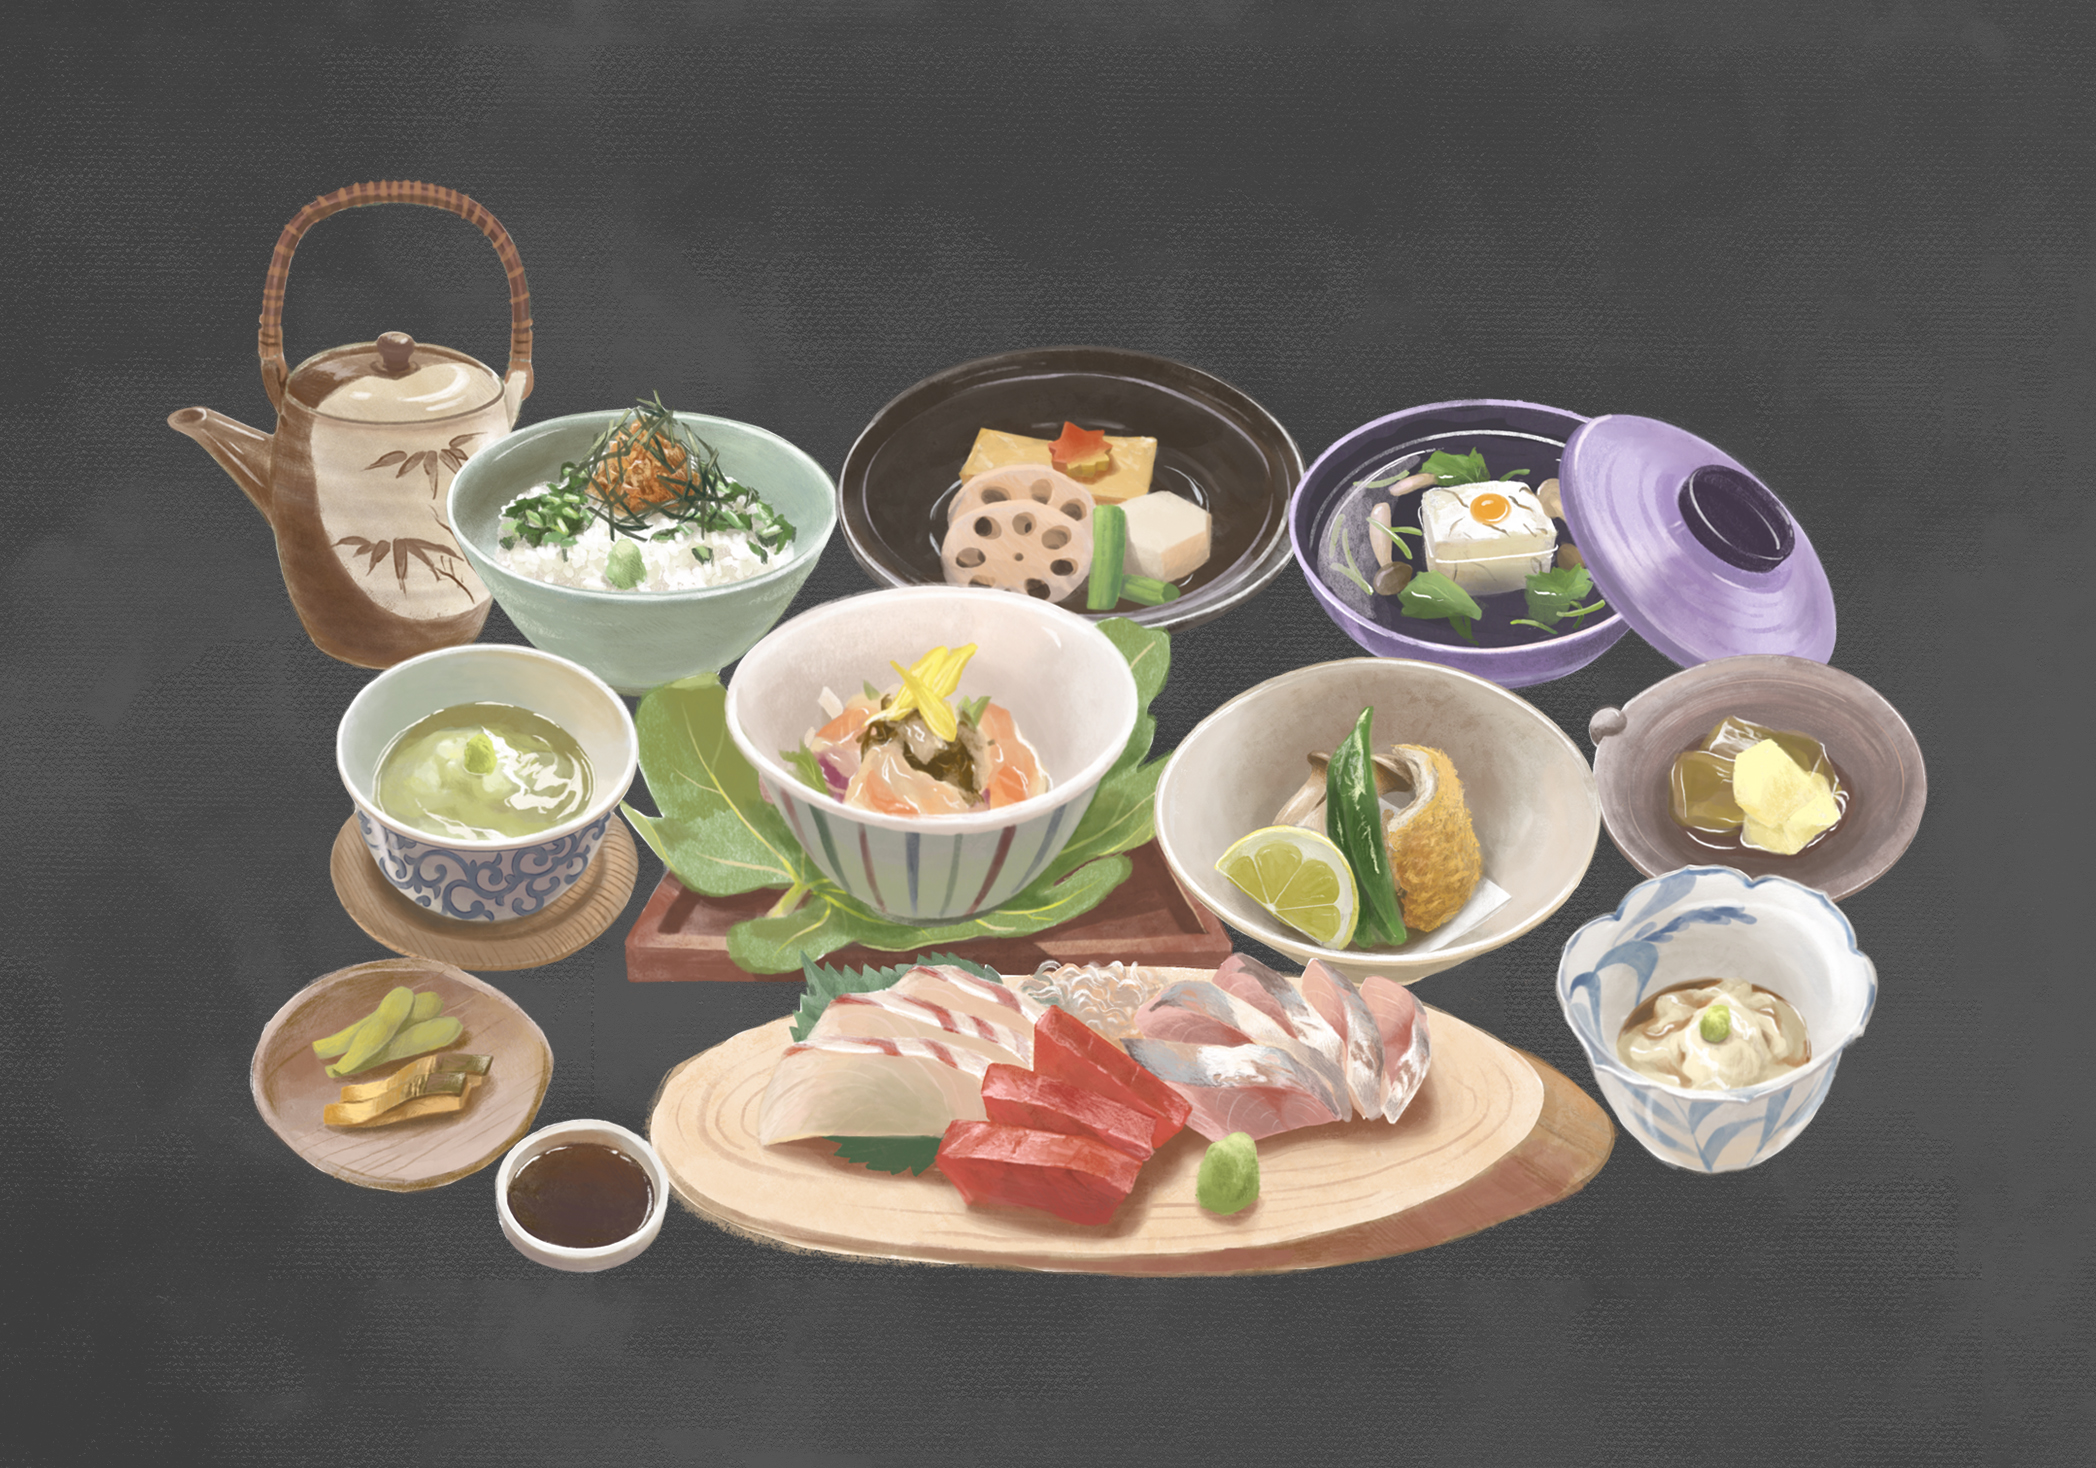 HACHIYOSHI / illustrator<br />
Create food illustrations